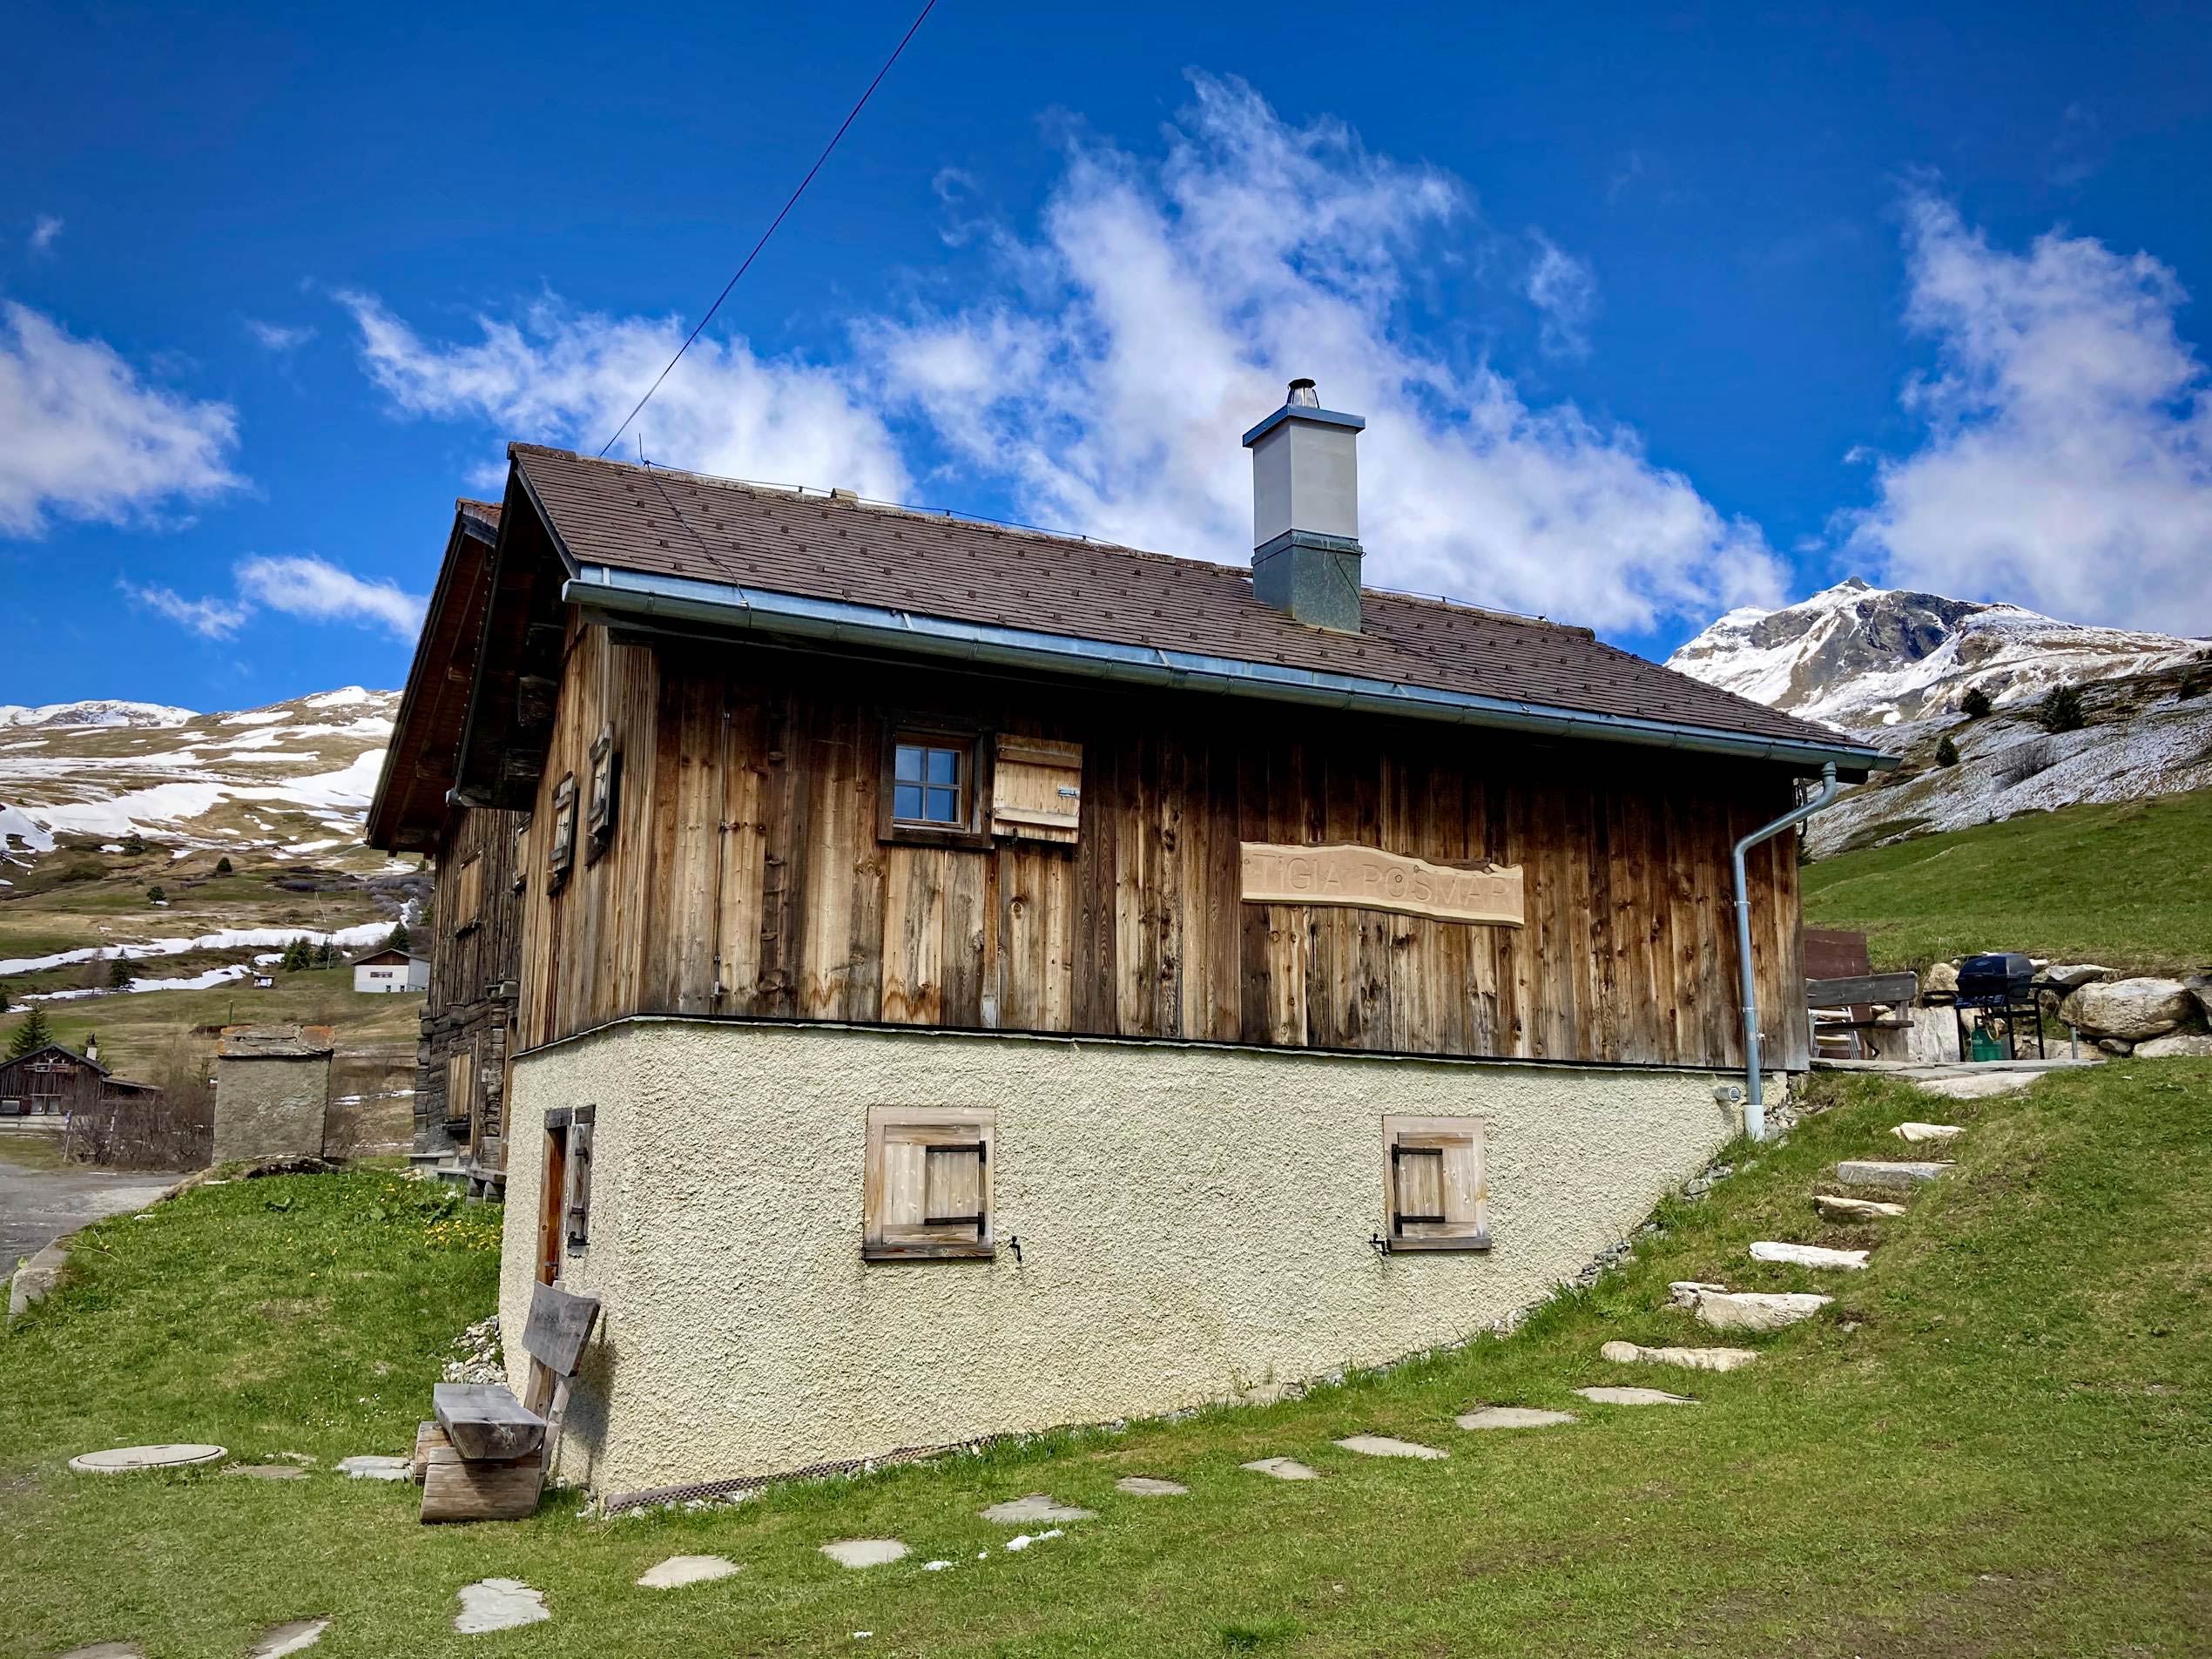 Maiensäss Tigia Rosmari, Radons, Savognin, Val Surses, Graubünden, Schweiz